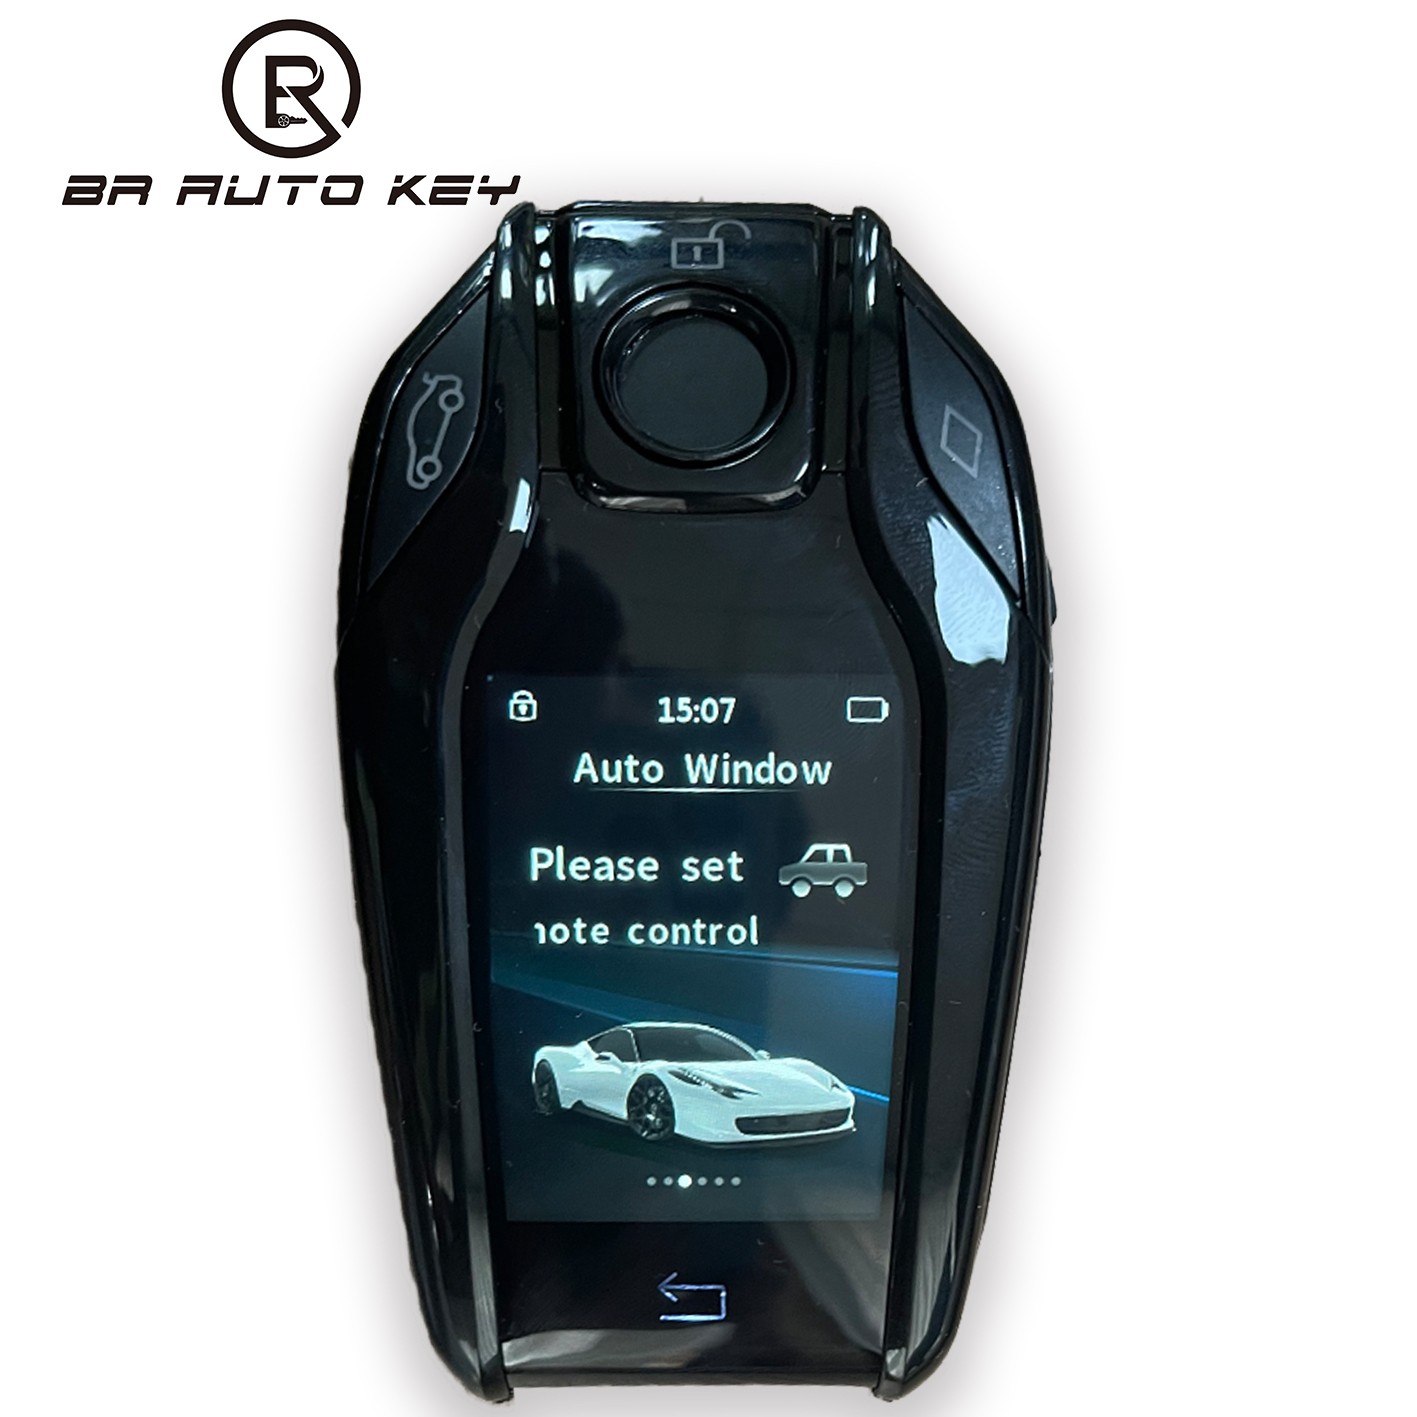 Modified Universal Boutique Smart Remote Key LCD Display Screen For Keyless Go Smart Key BMW Benz Audi Jeep Hyundai Kia